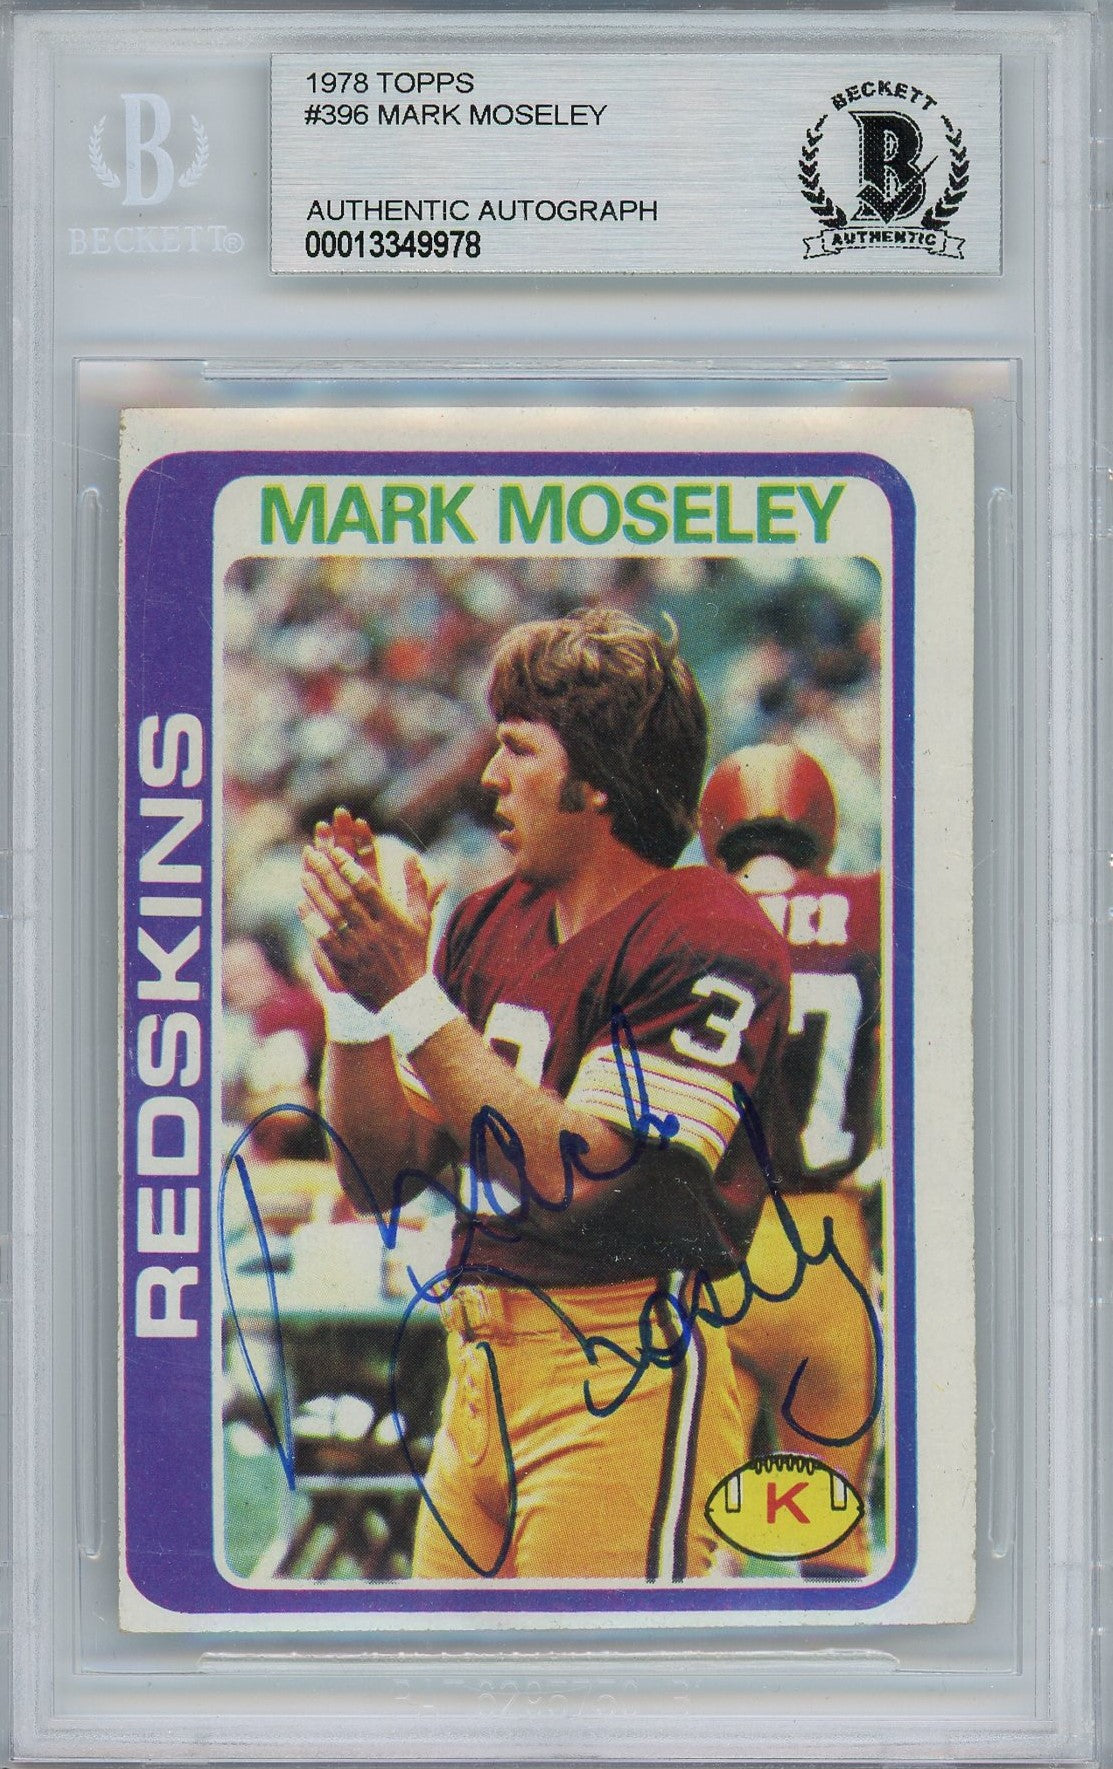 1978 TOPPS MARK MOSELEY AUTO CARD BAS (9978)